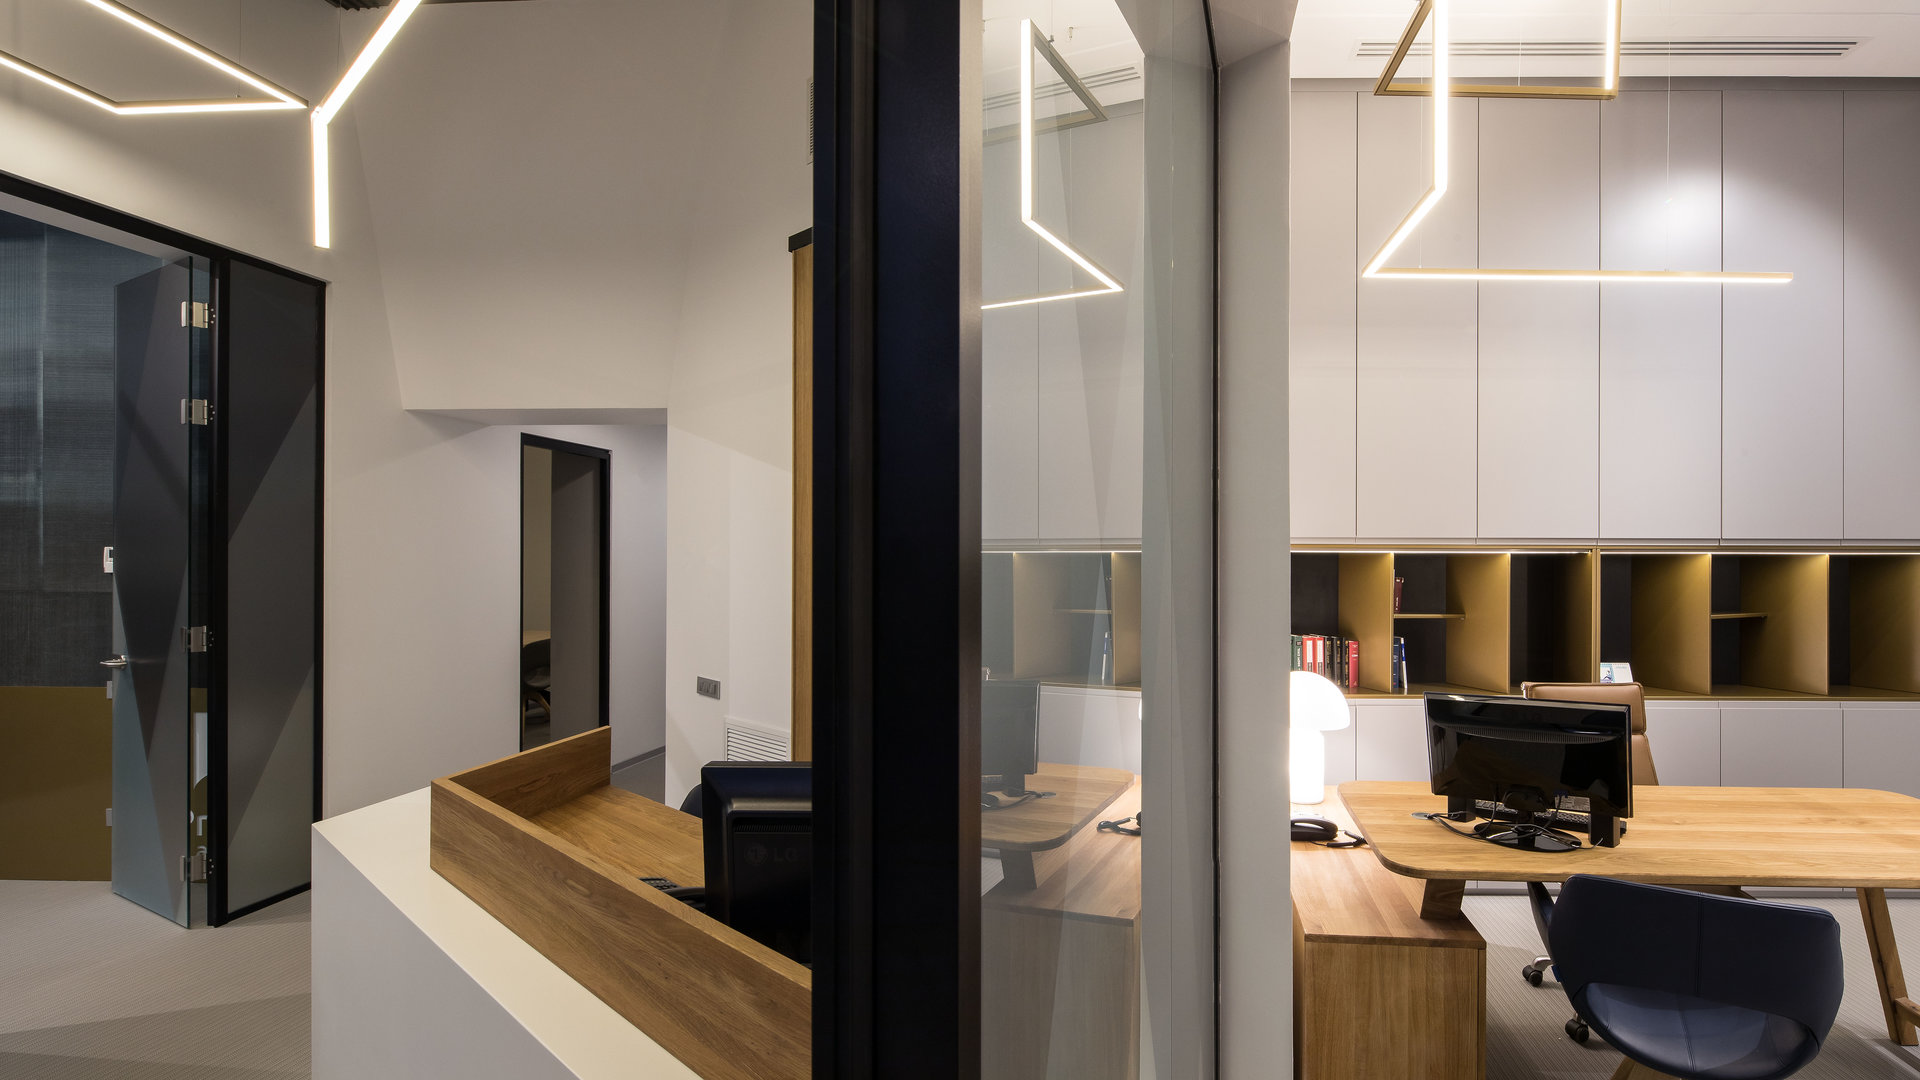 Predoi & Associates Office Design